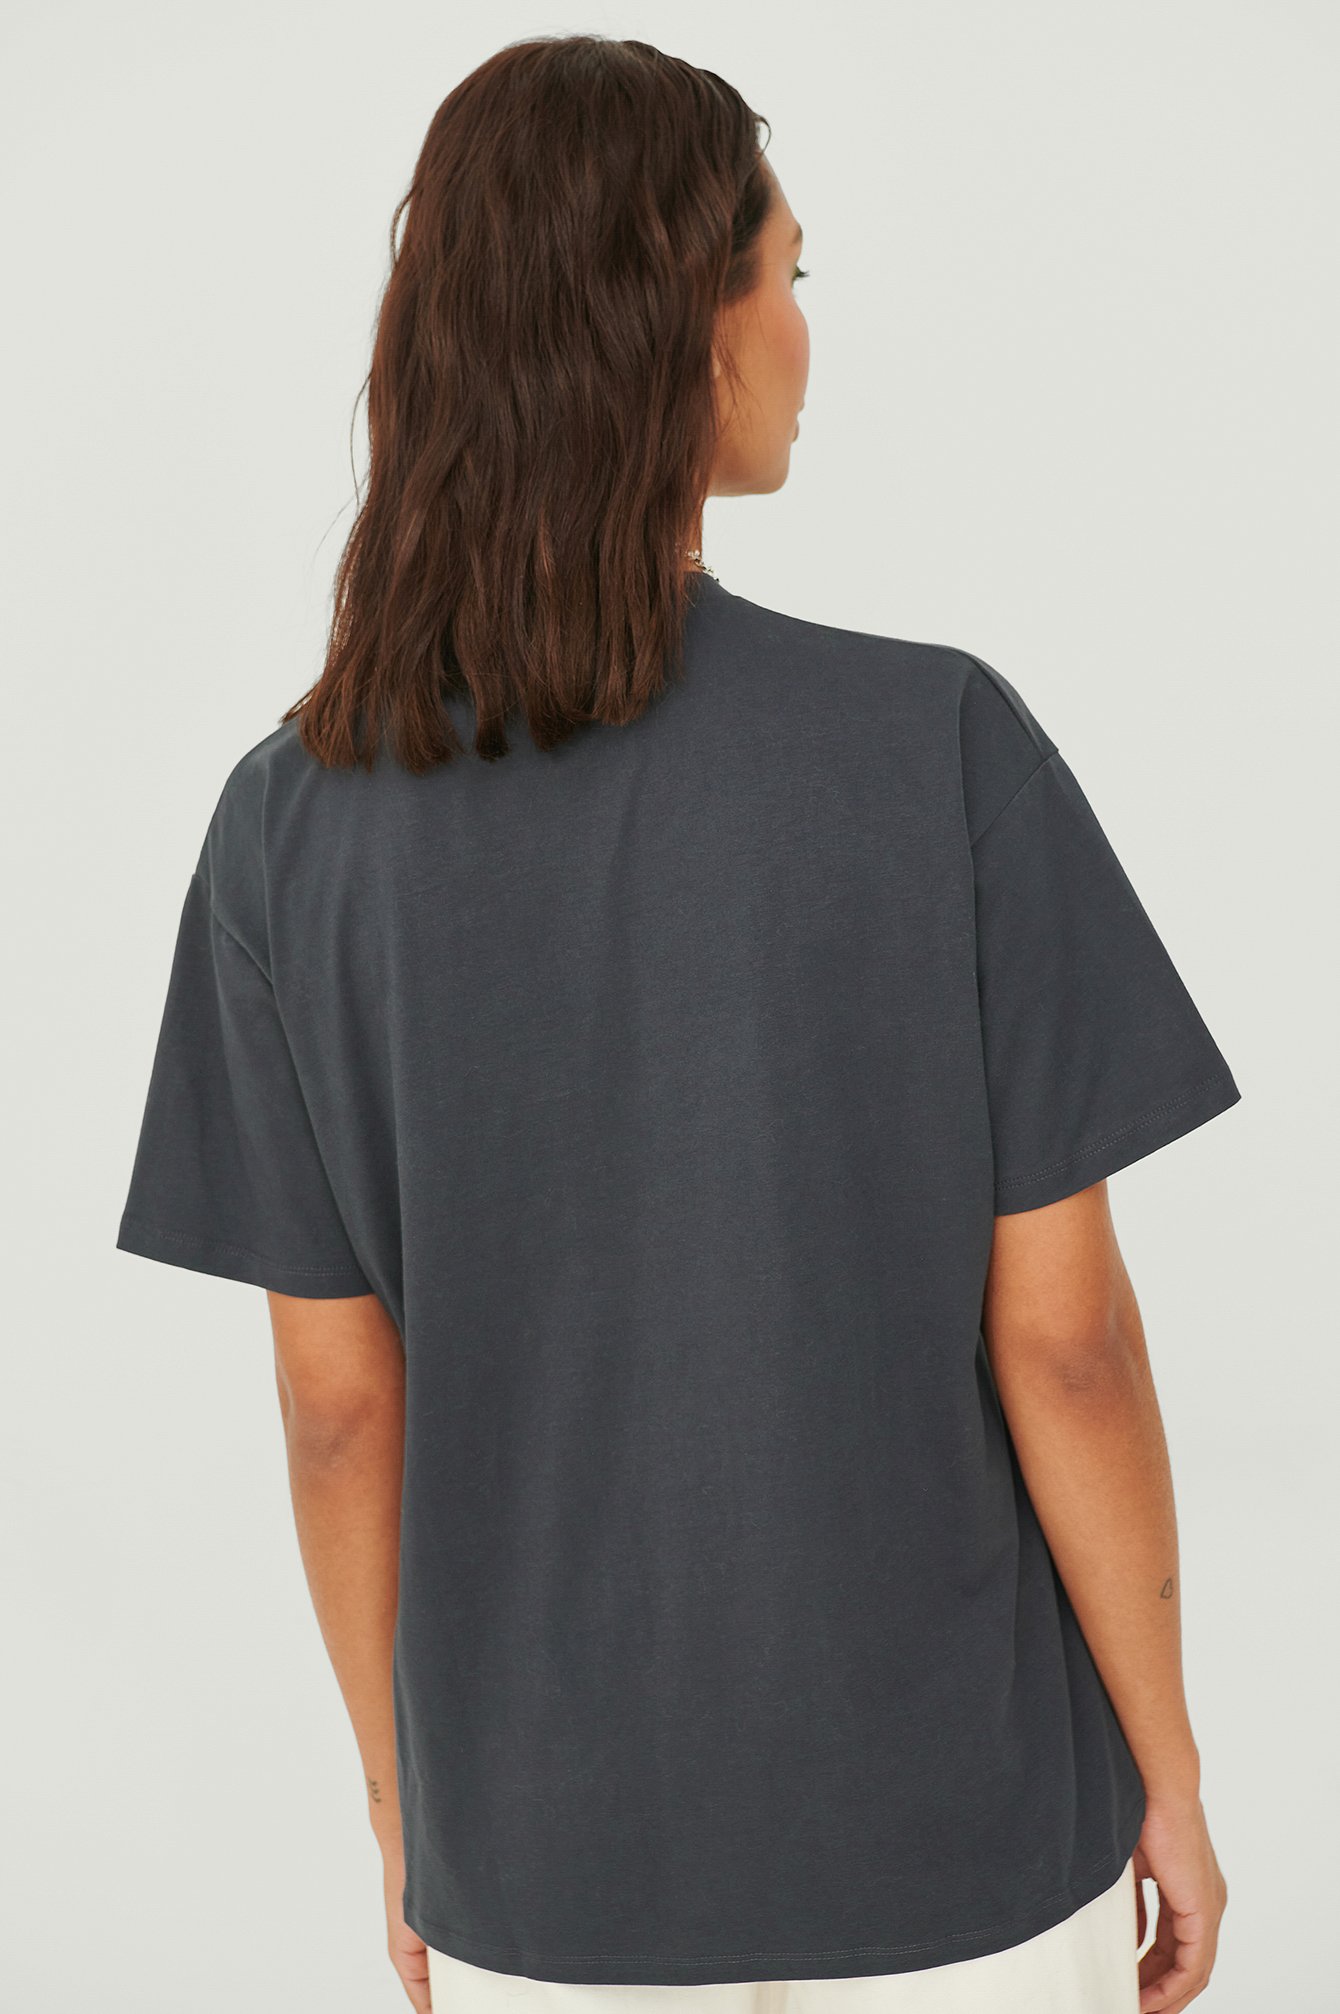 Off Black Organisk oversized t-skjorte med rund hals